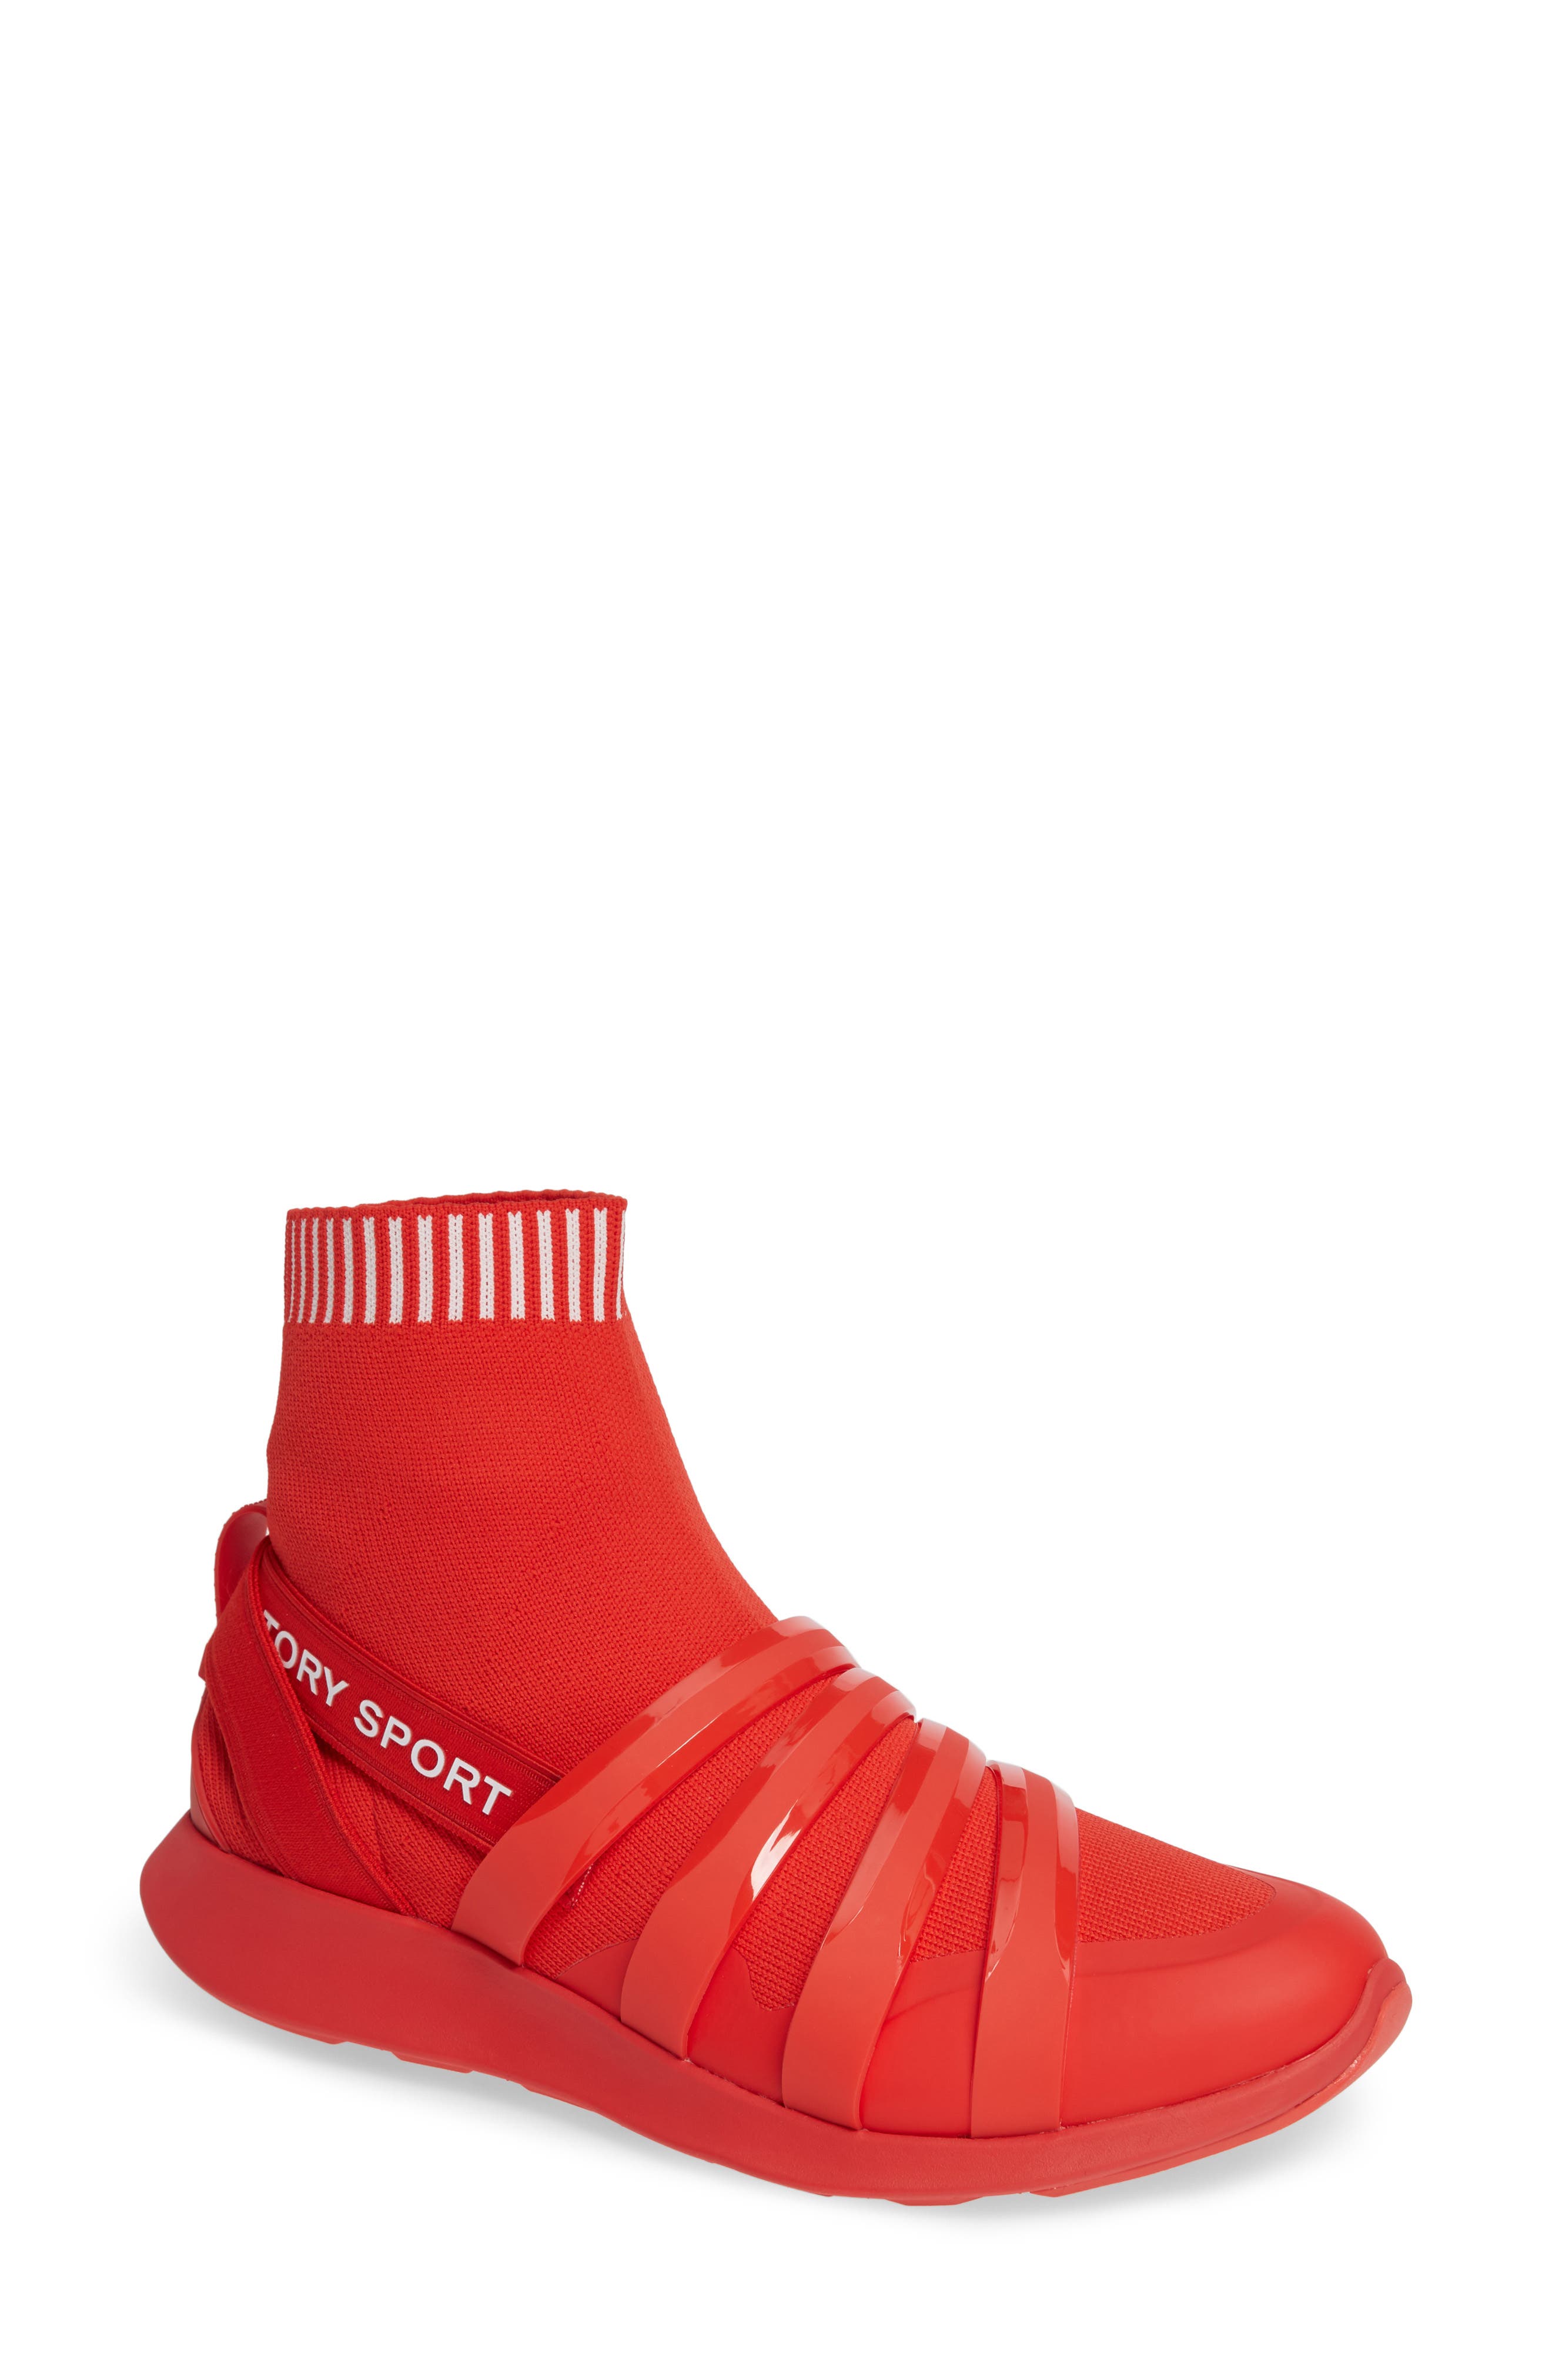 Tory Sport Performance Sock Sneaker 